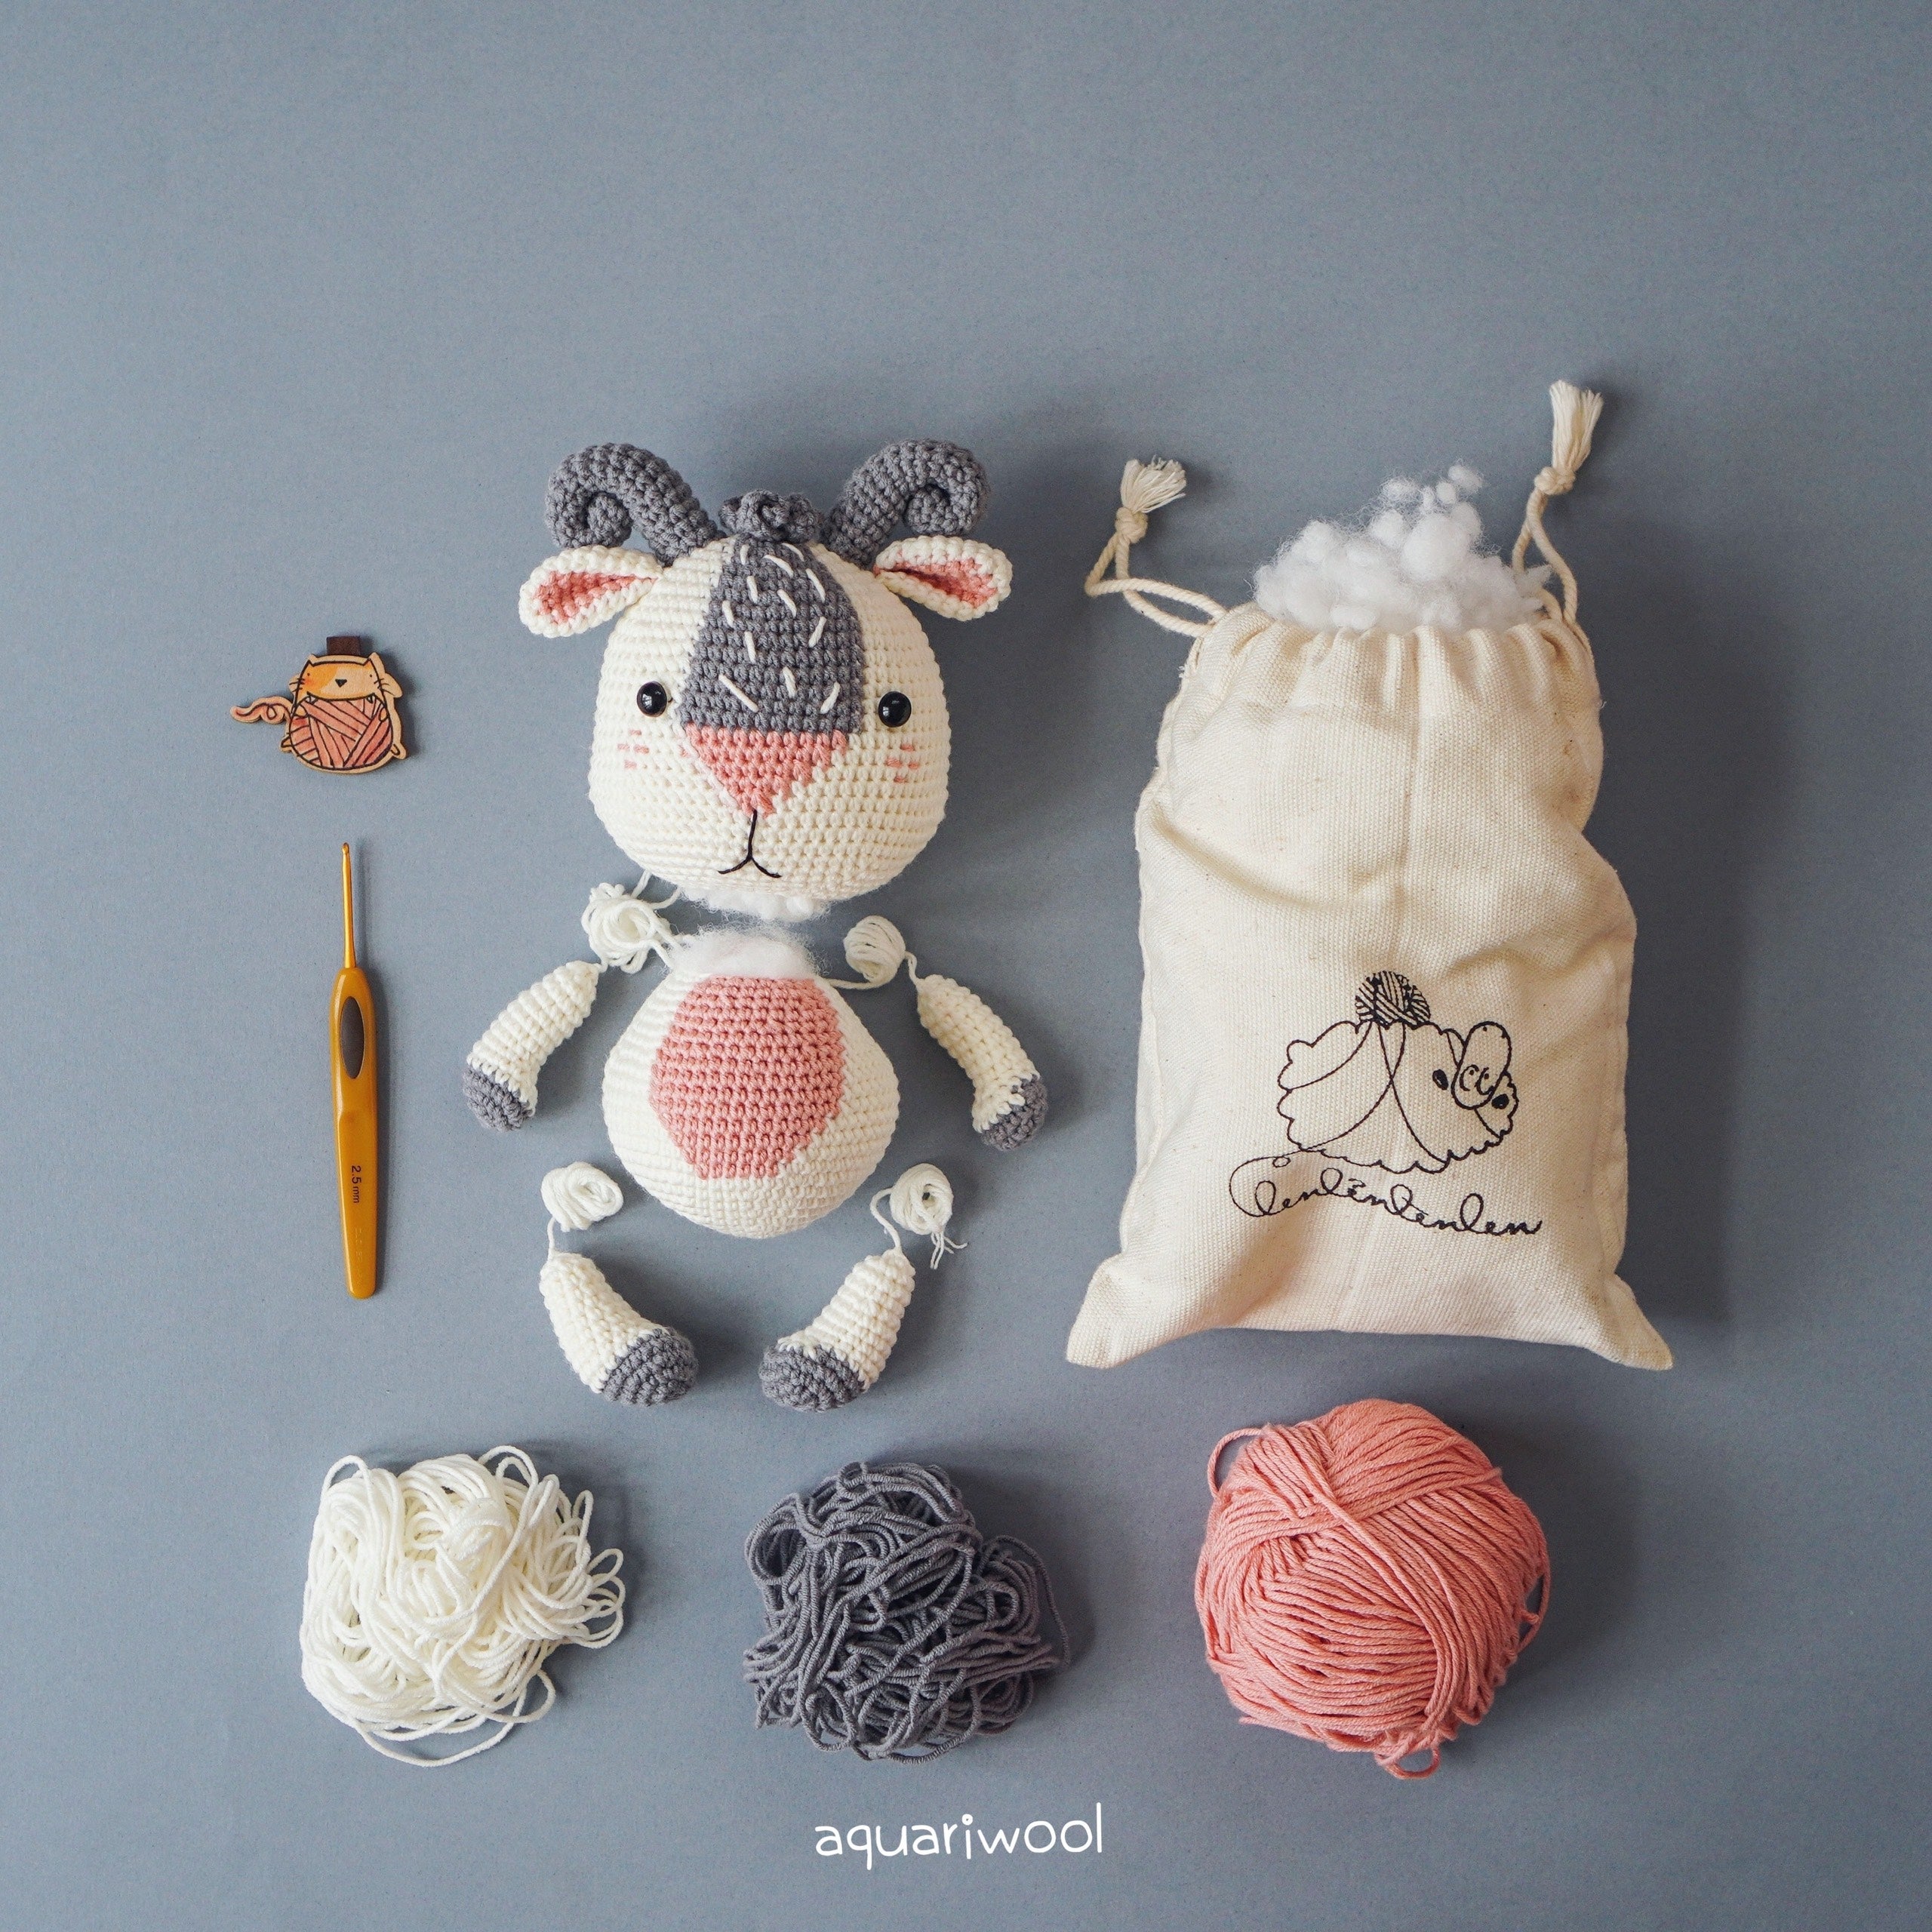 Gigi The Goat Crochet Pattern by Aquariwool Crochet (Crochet Doll Pattern/Amigurumi Pattern for Baby gift)